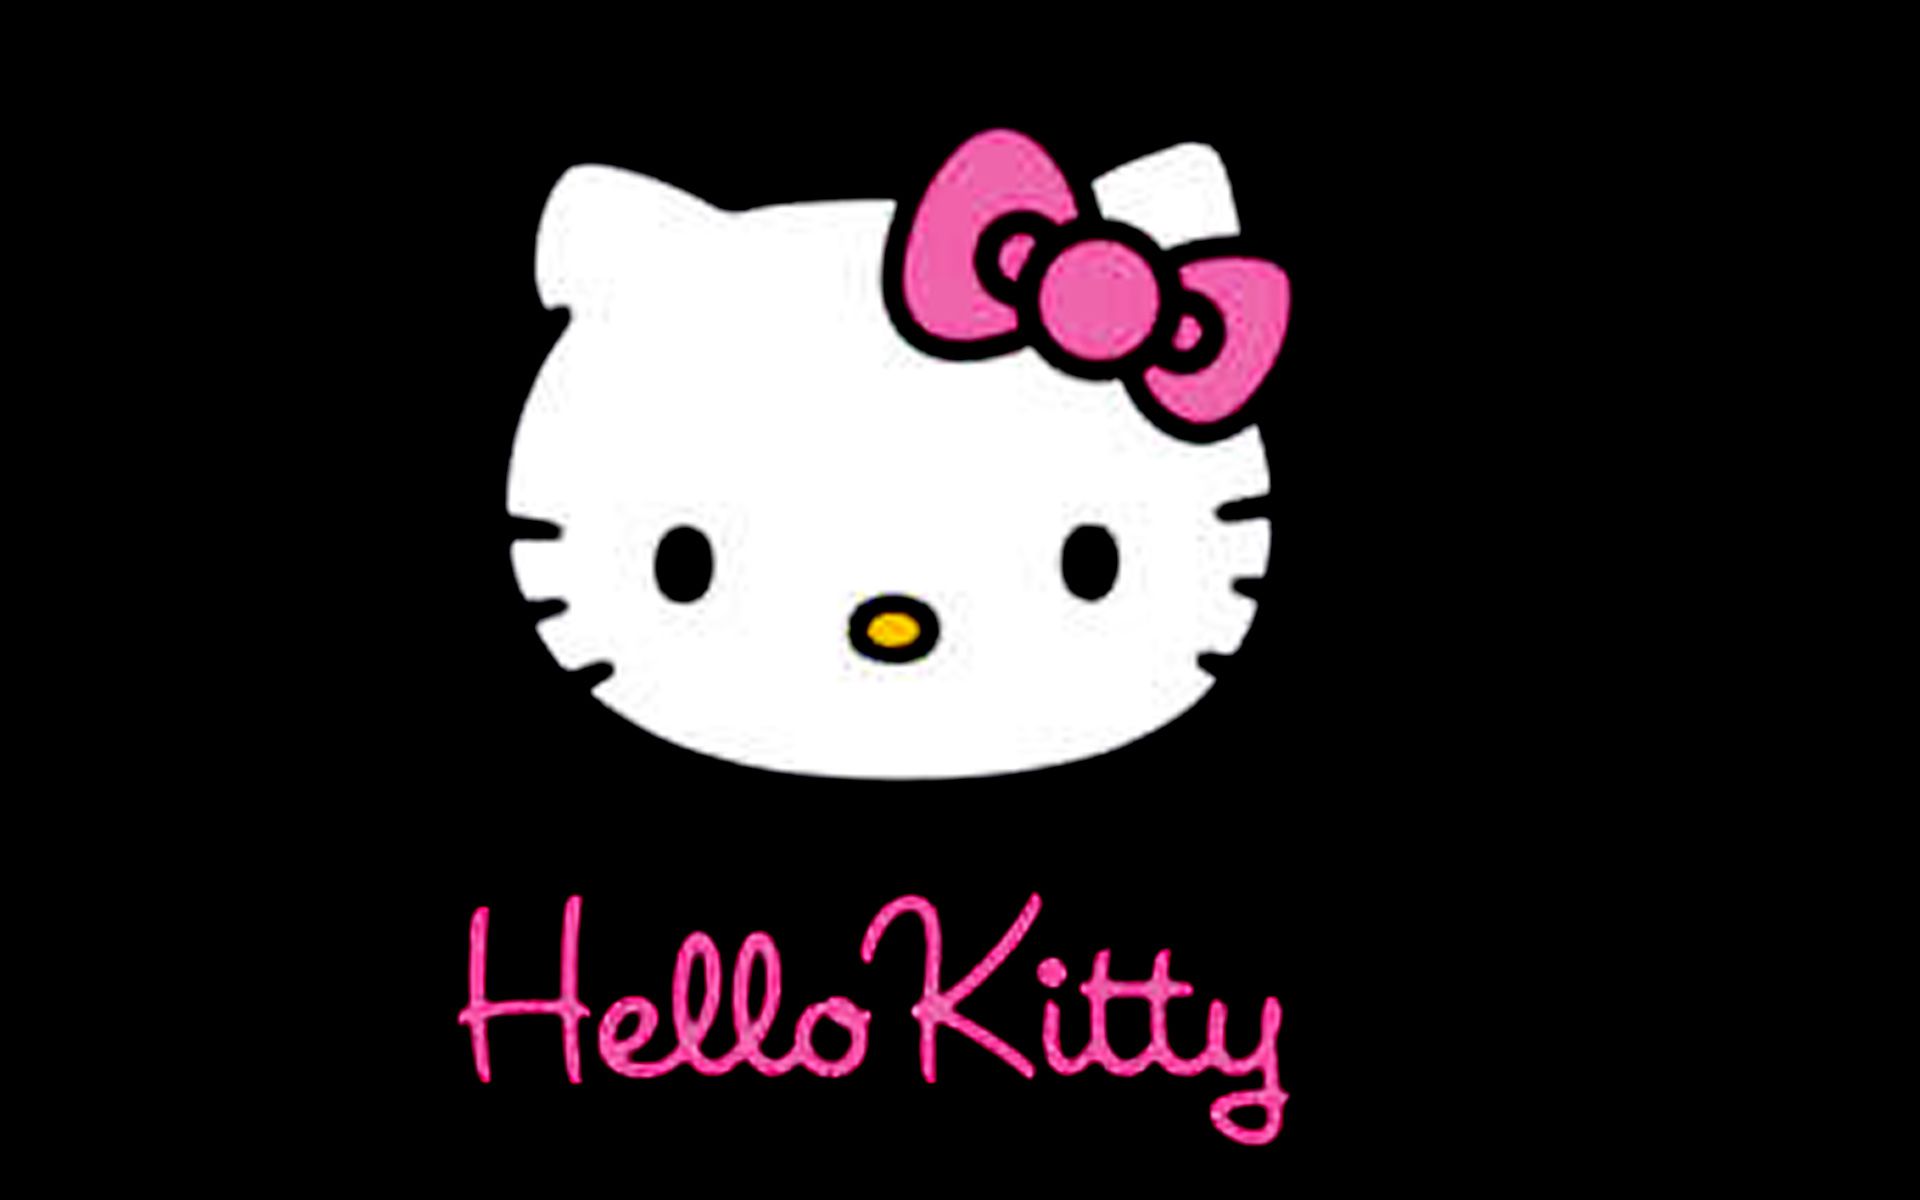 Hello kitty wallpaper hd